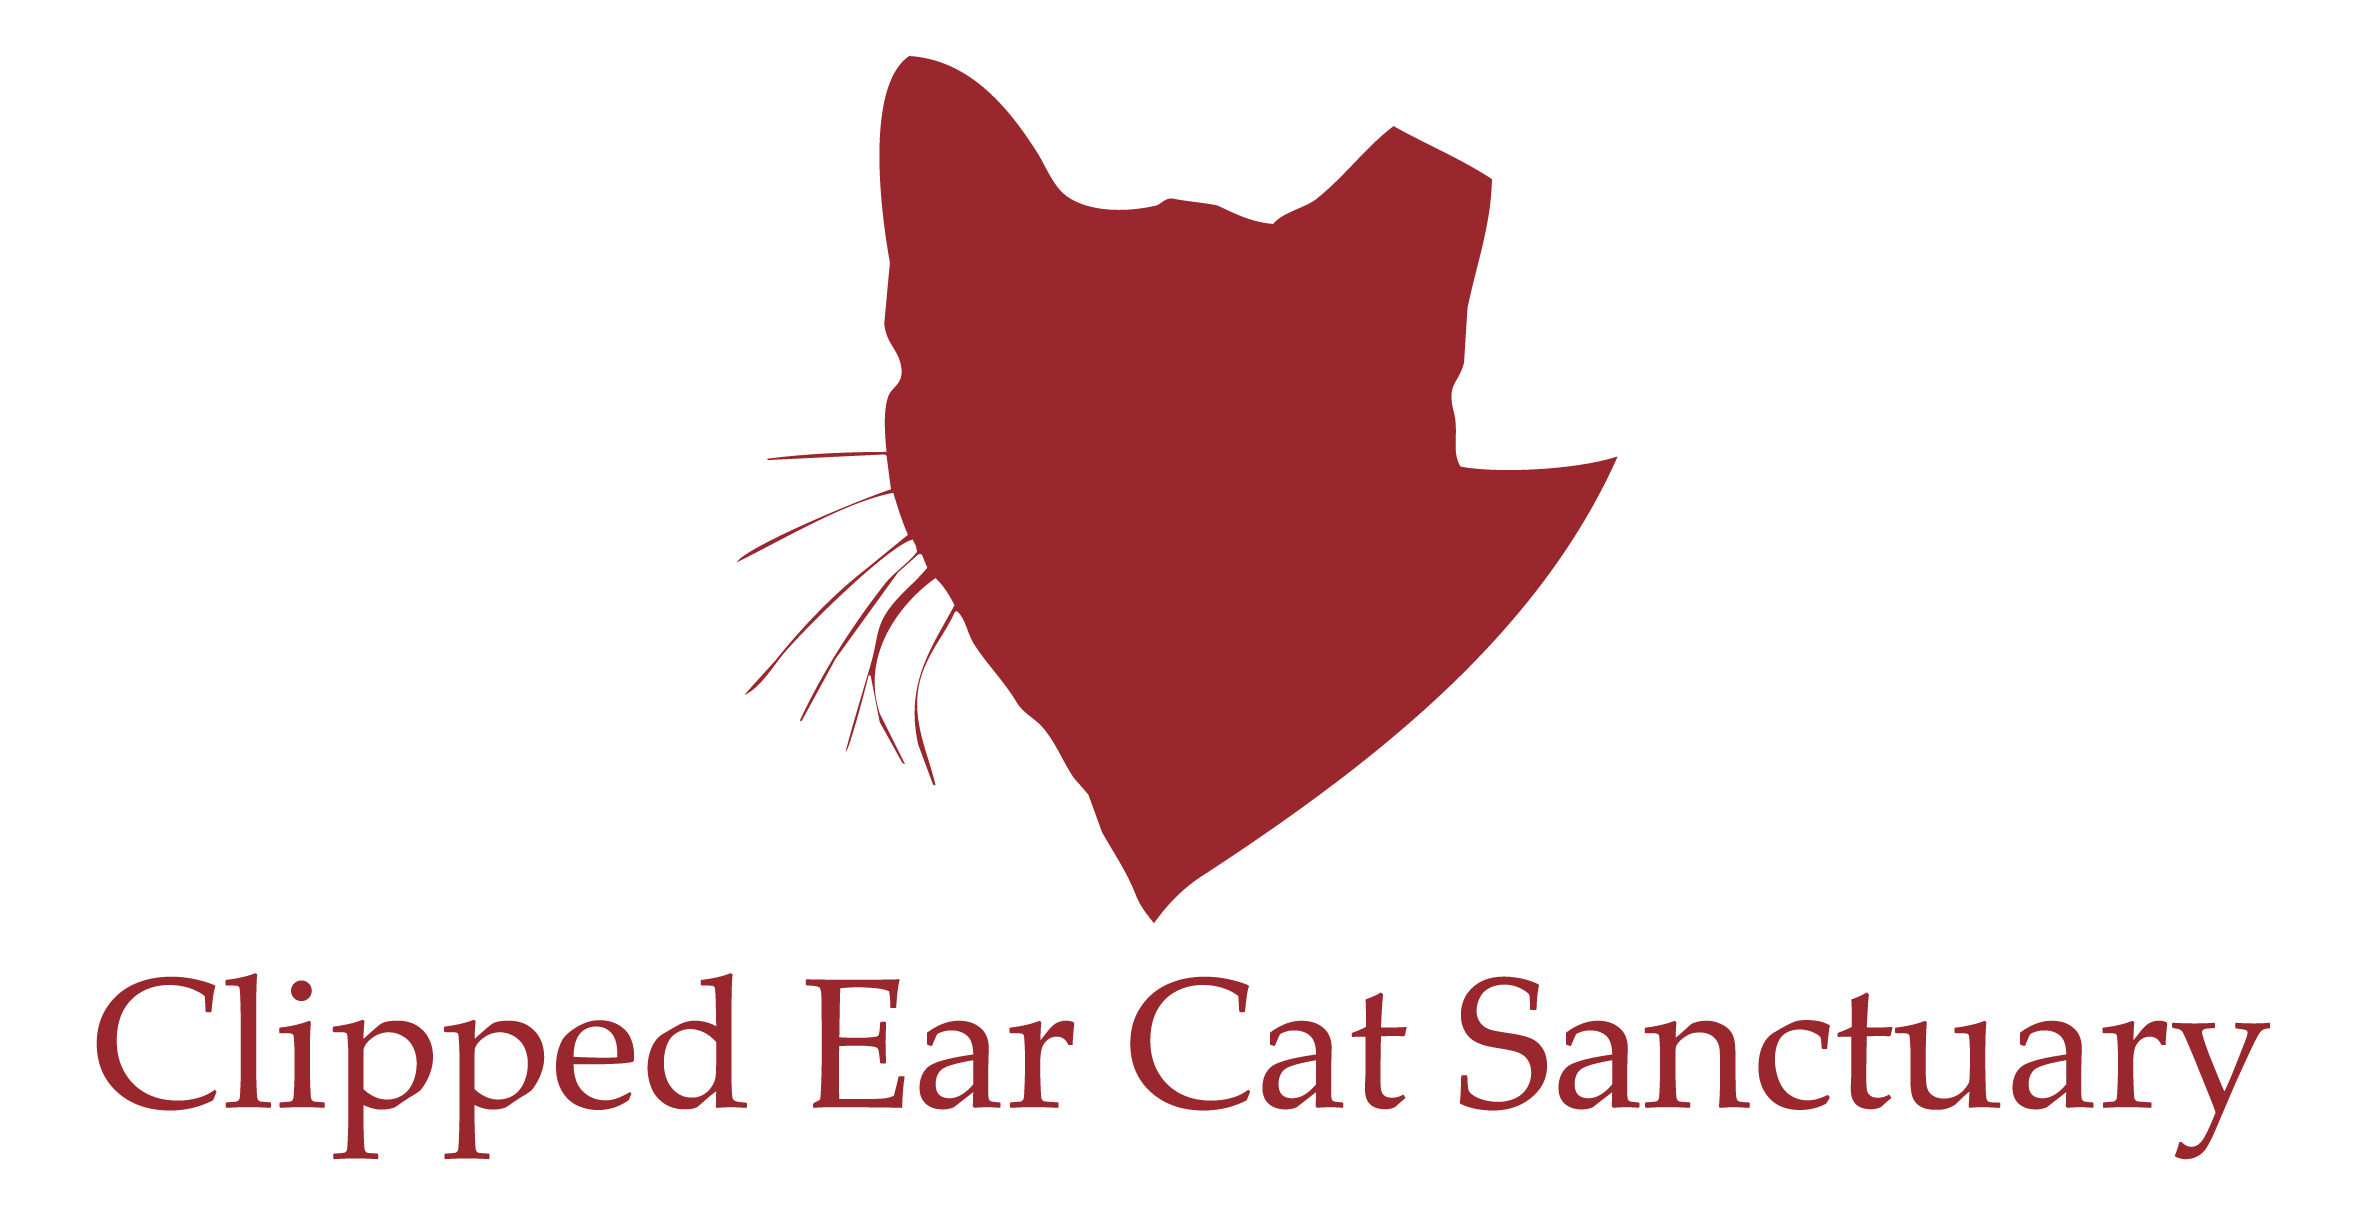 Clipped Ear Cat Sanctuary